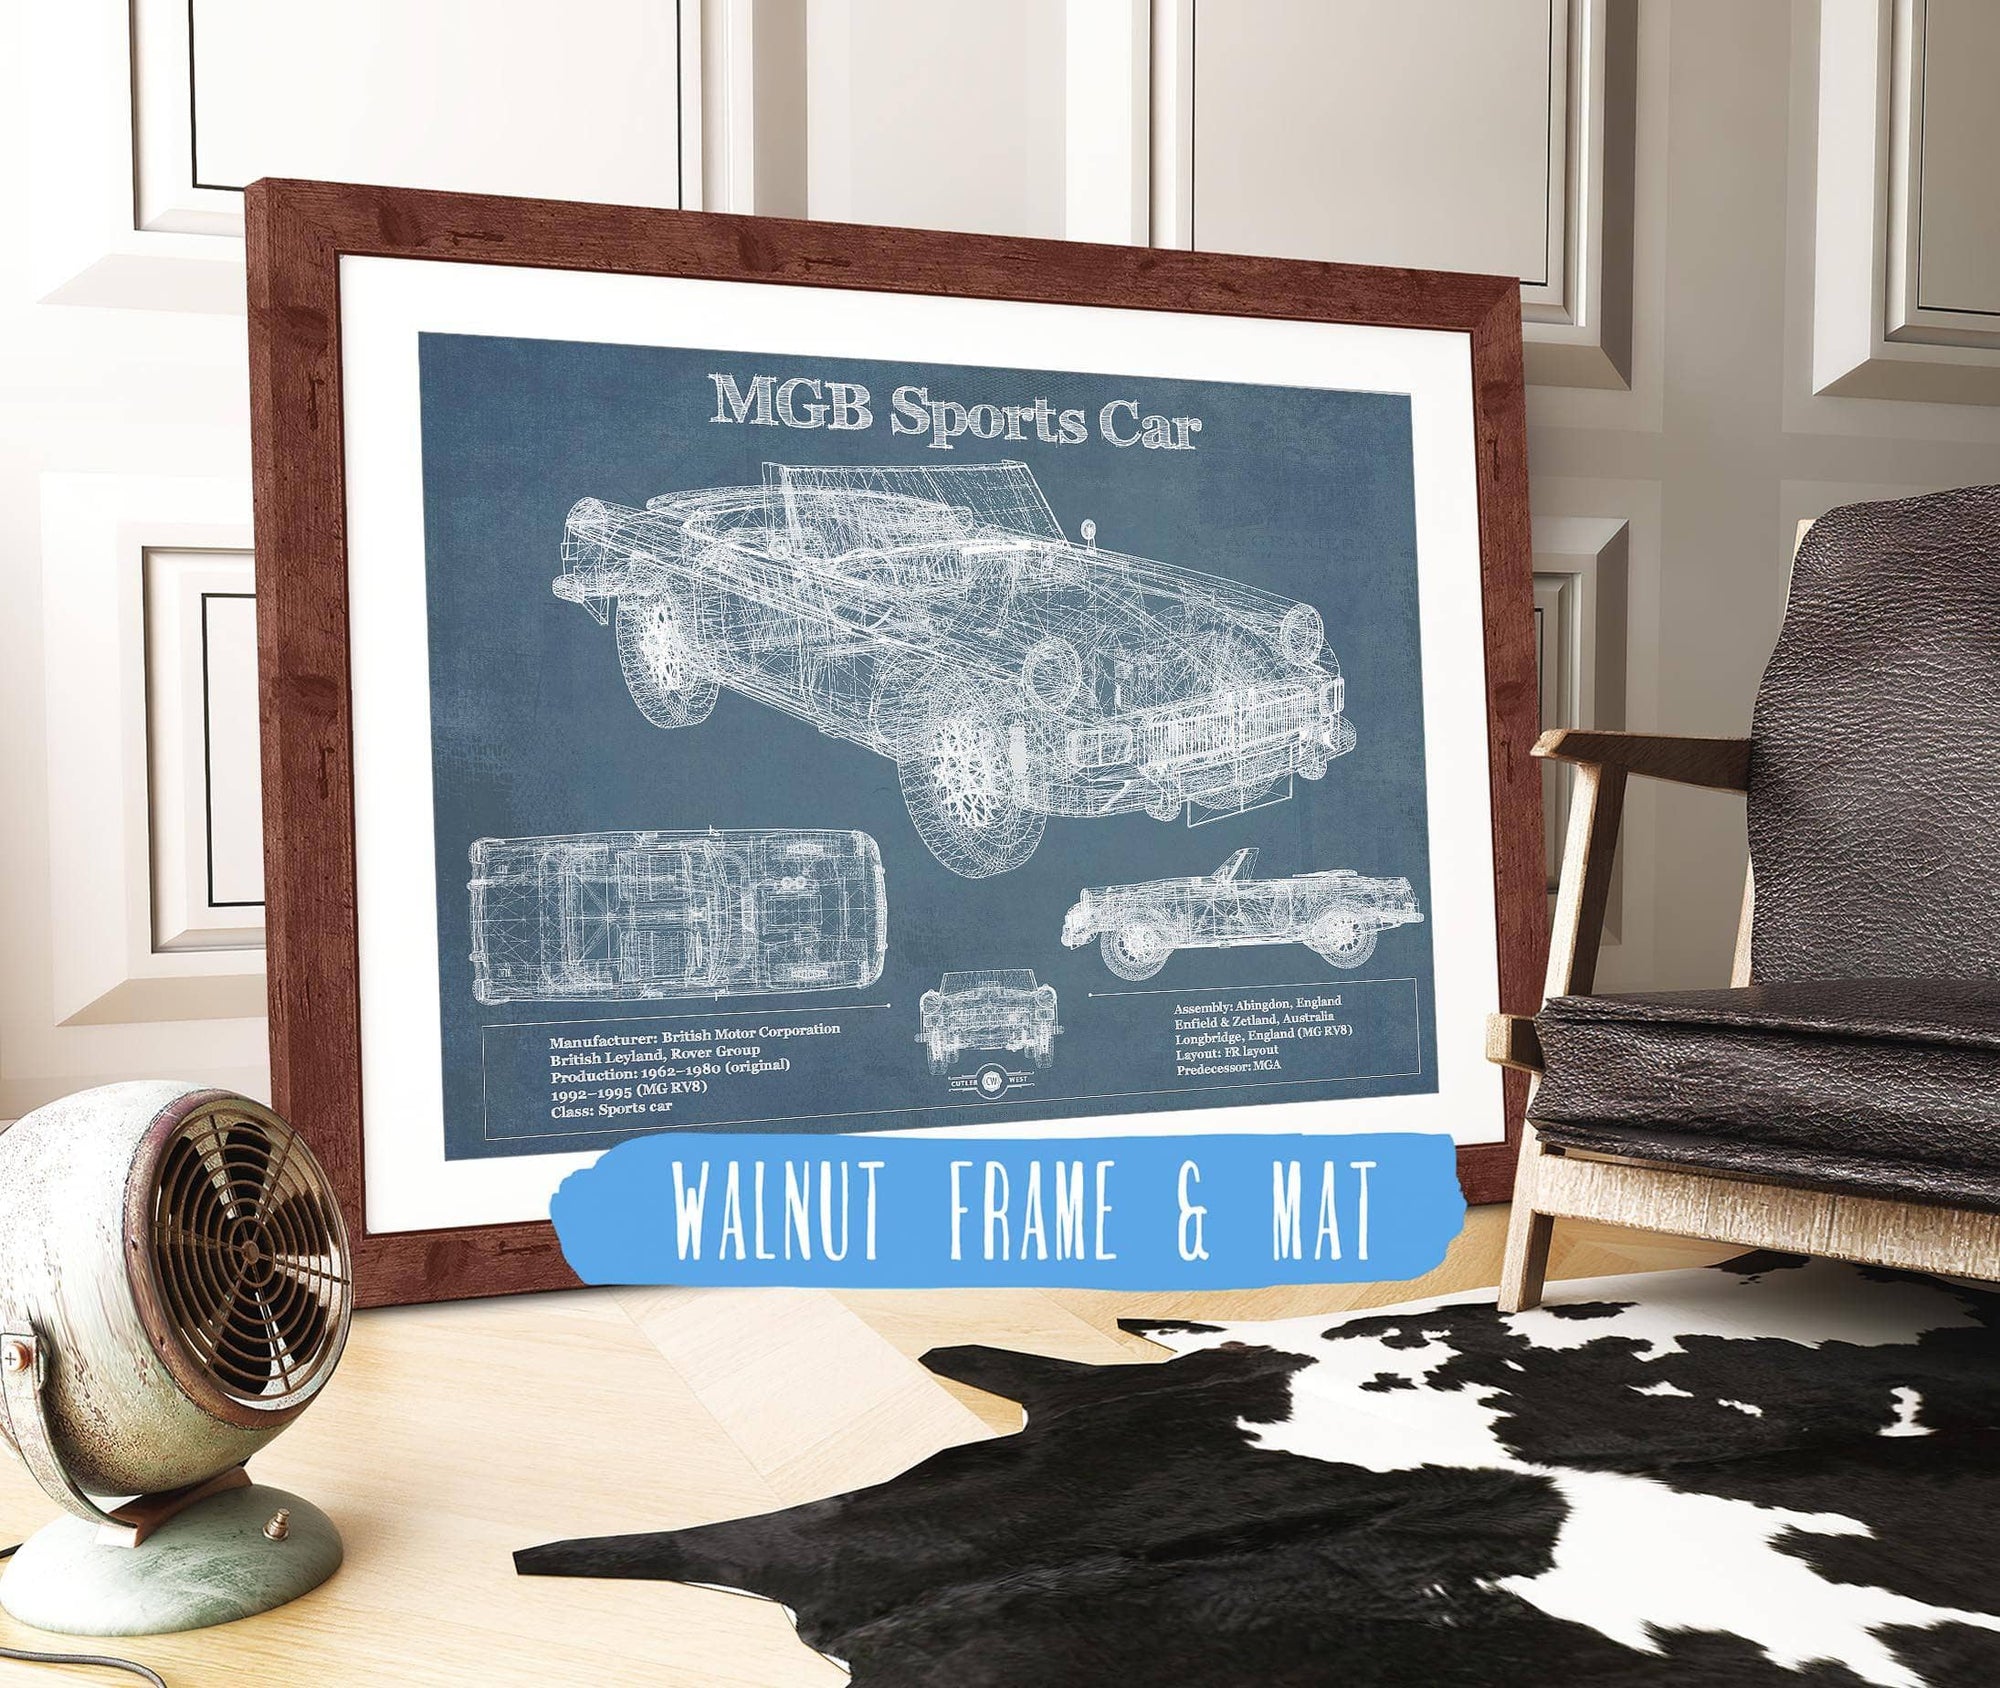 Cutler West Vehicle Collection Mgb Sports Car Blueprint Vintage Auto Print